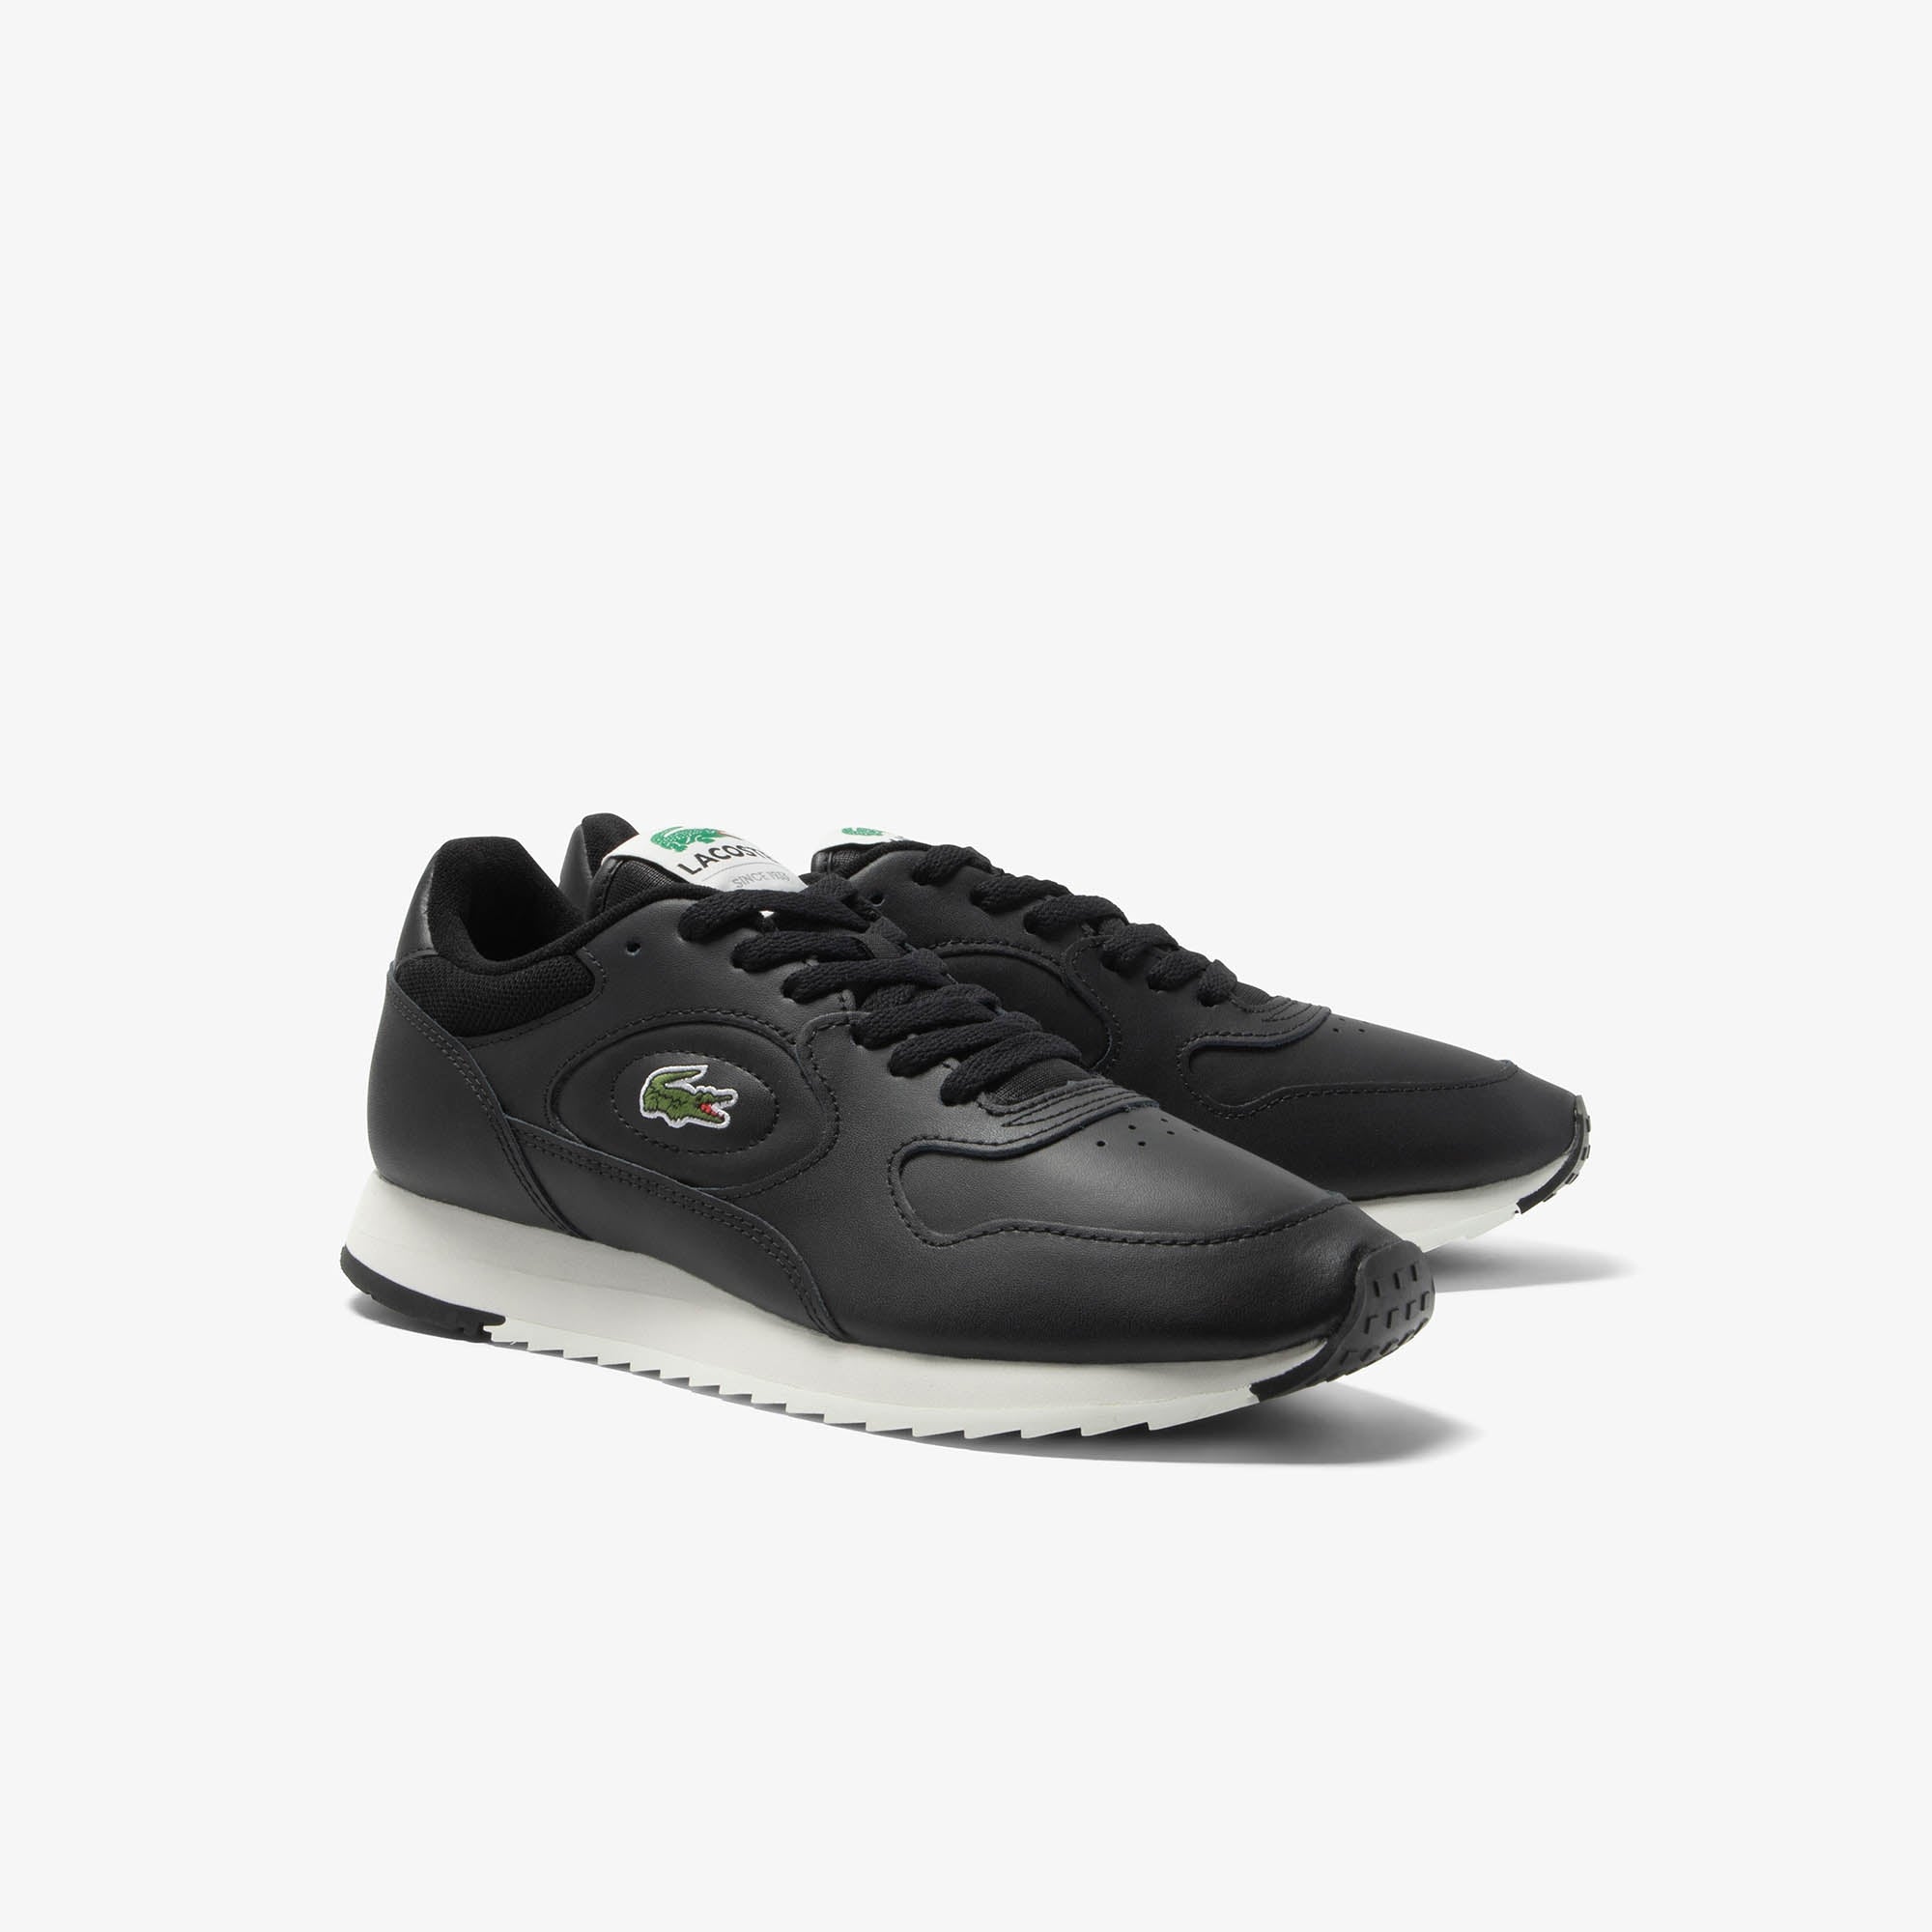 Lacoste - Linetrack 2231 SMA Sneaker - Black/Offwhite